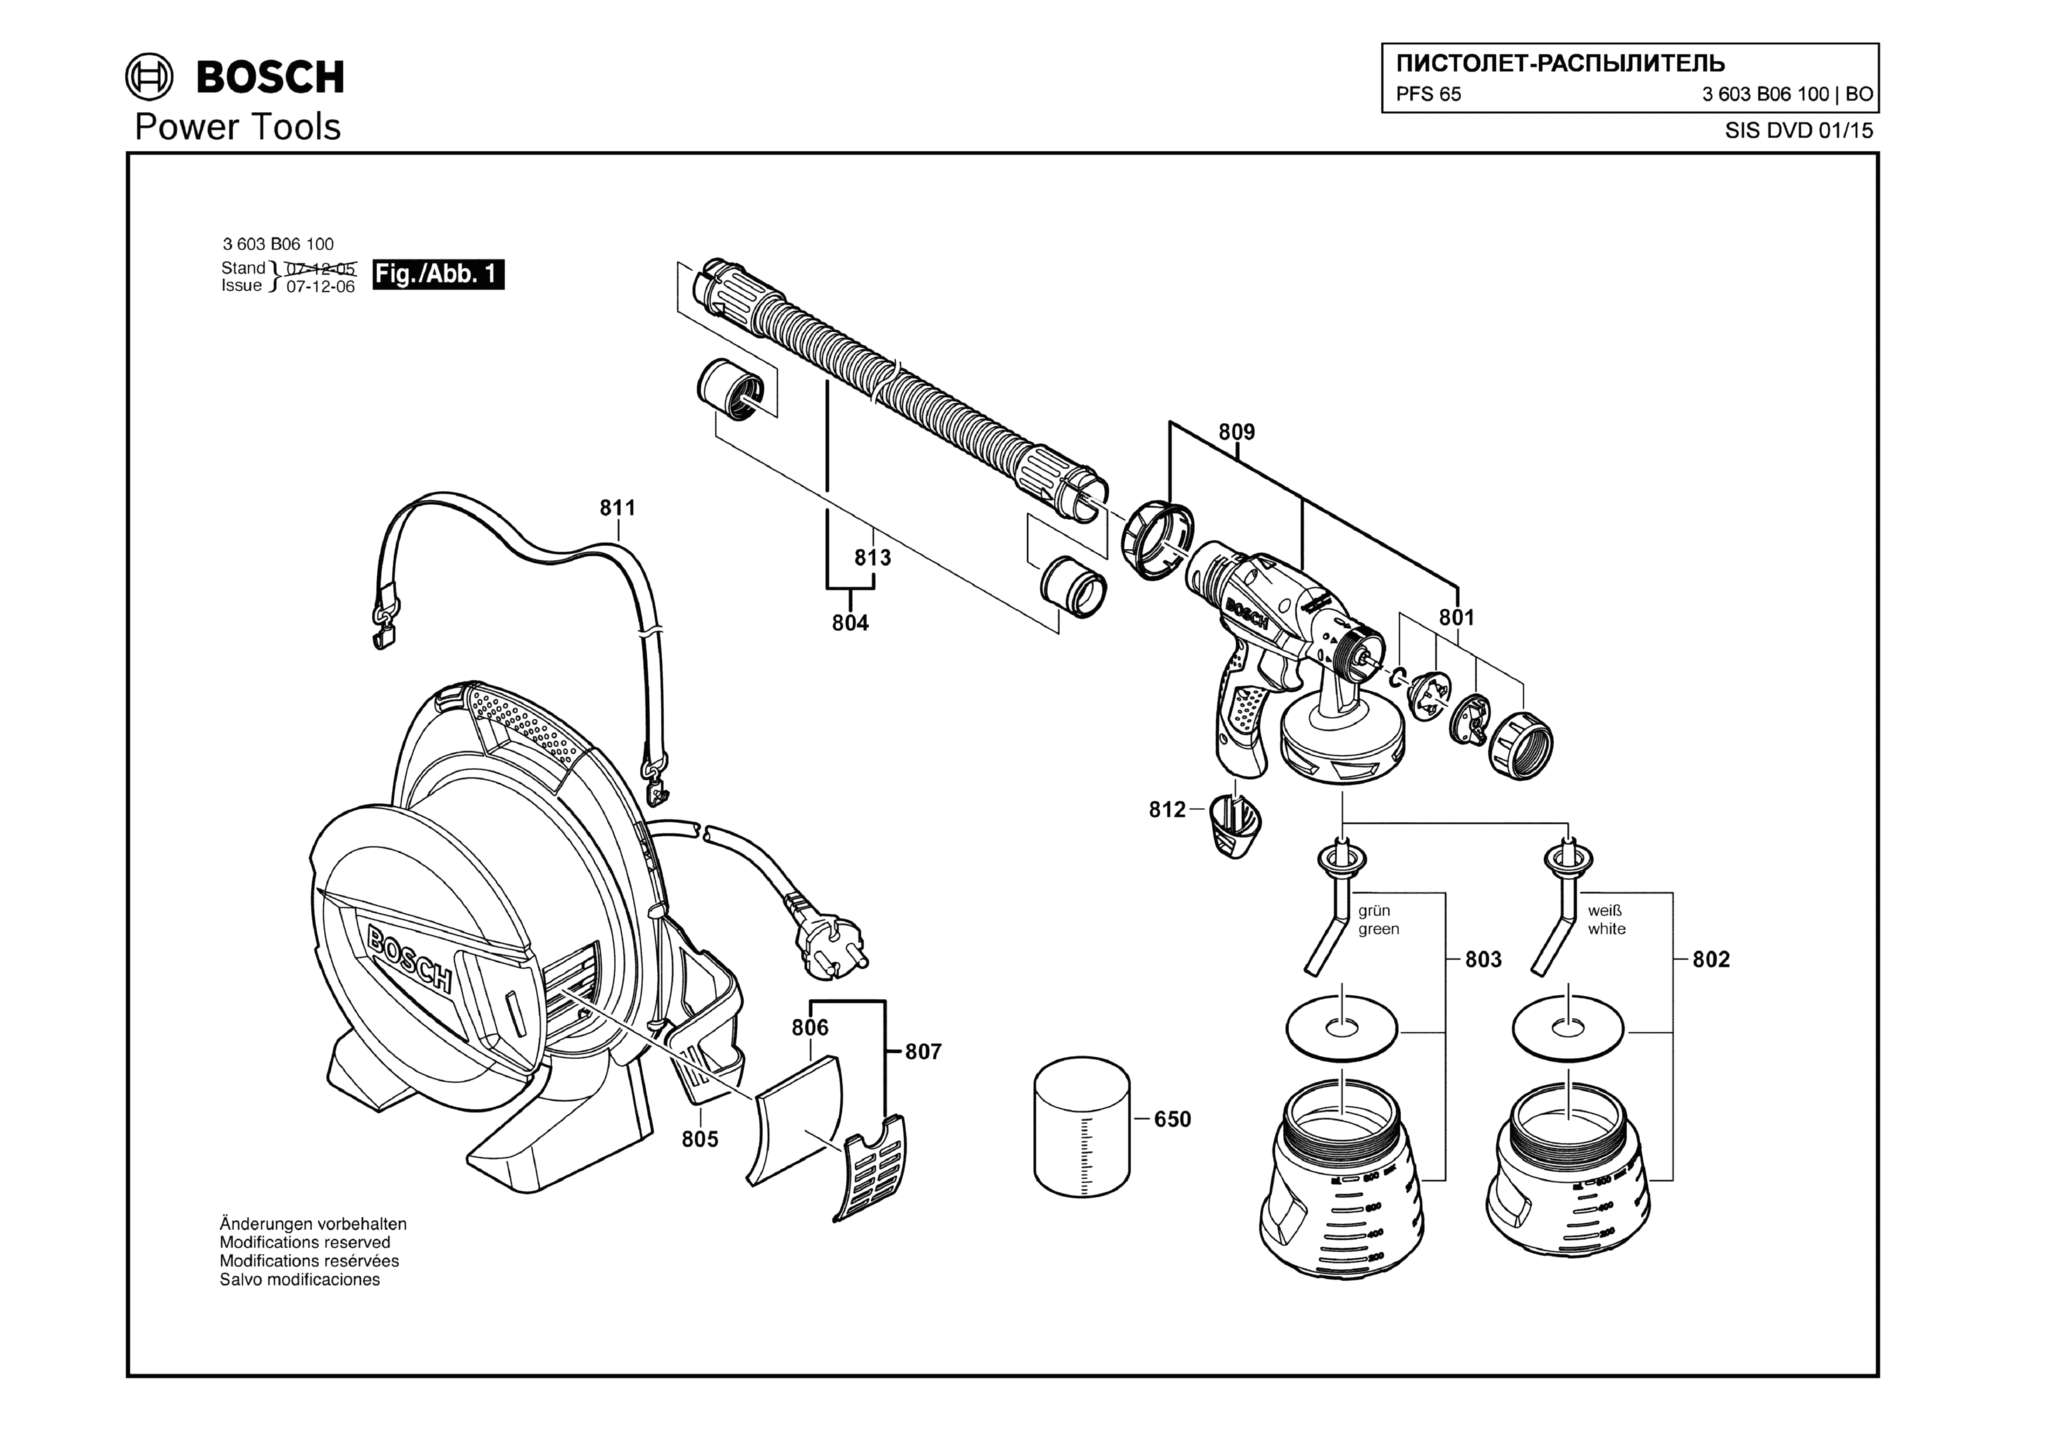 Запчасти, схема и деталировка Bosch PFS 65 (ТИП 3603B06100)